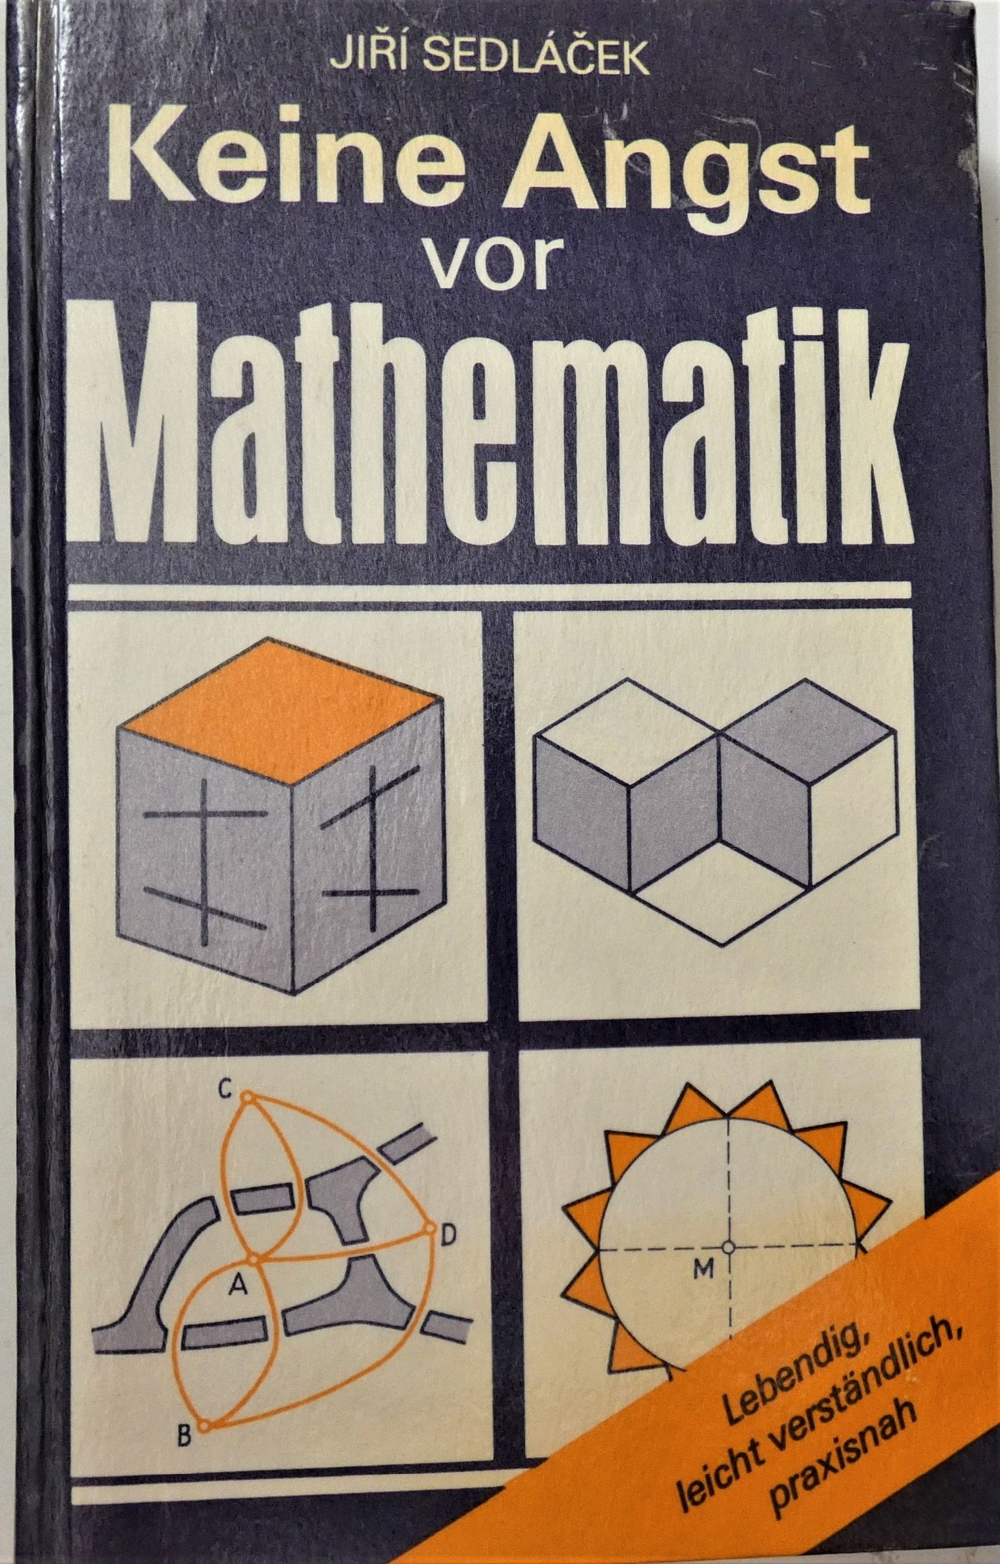 Keine Angst vor Mathematik / Jiri Sedlacek / ISBN 3-8112-0463-7